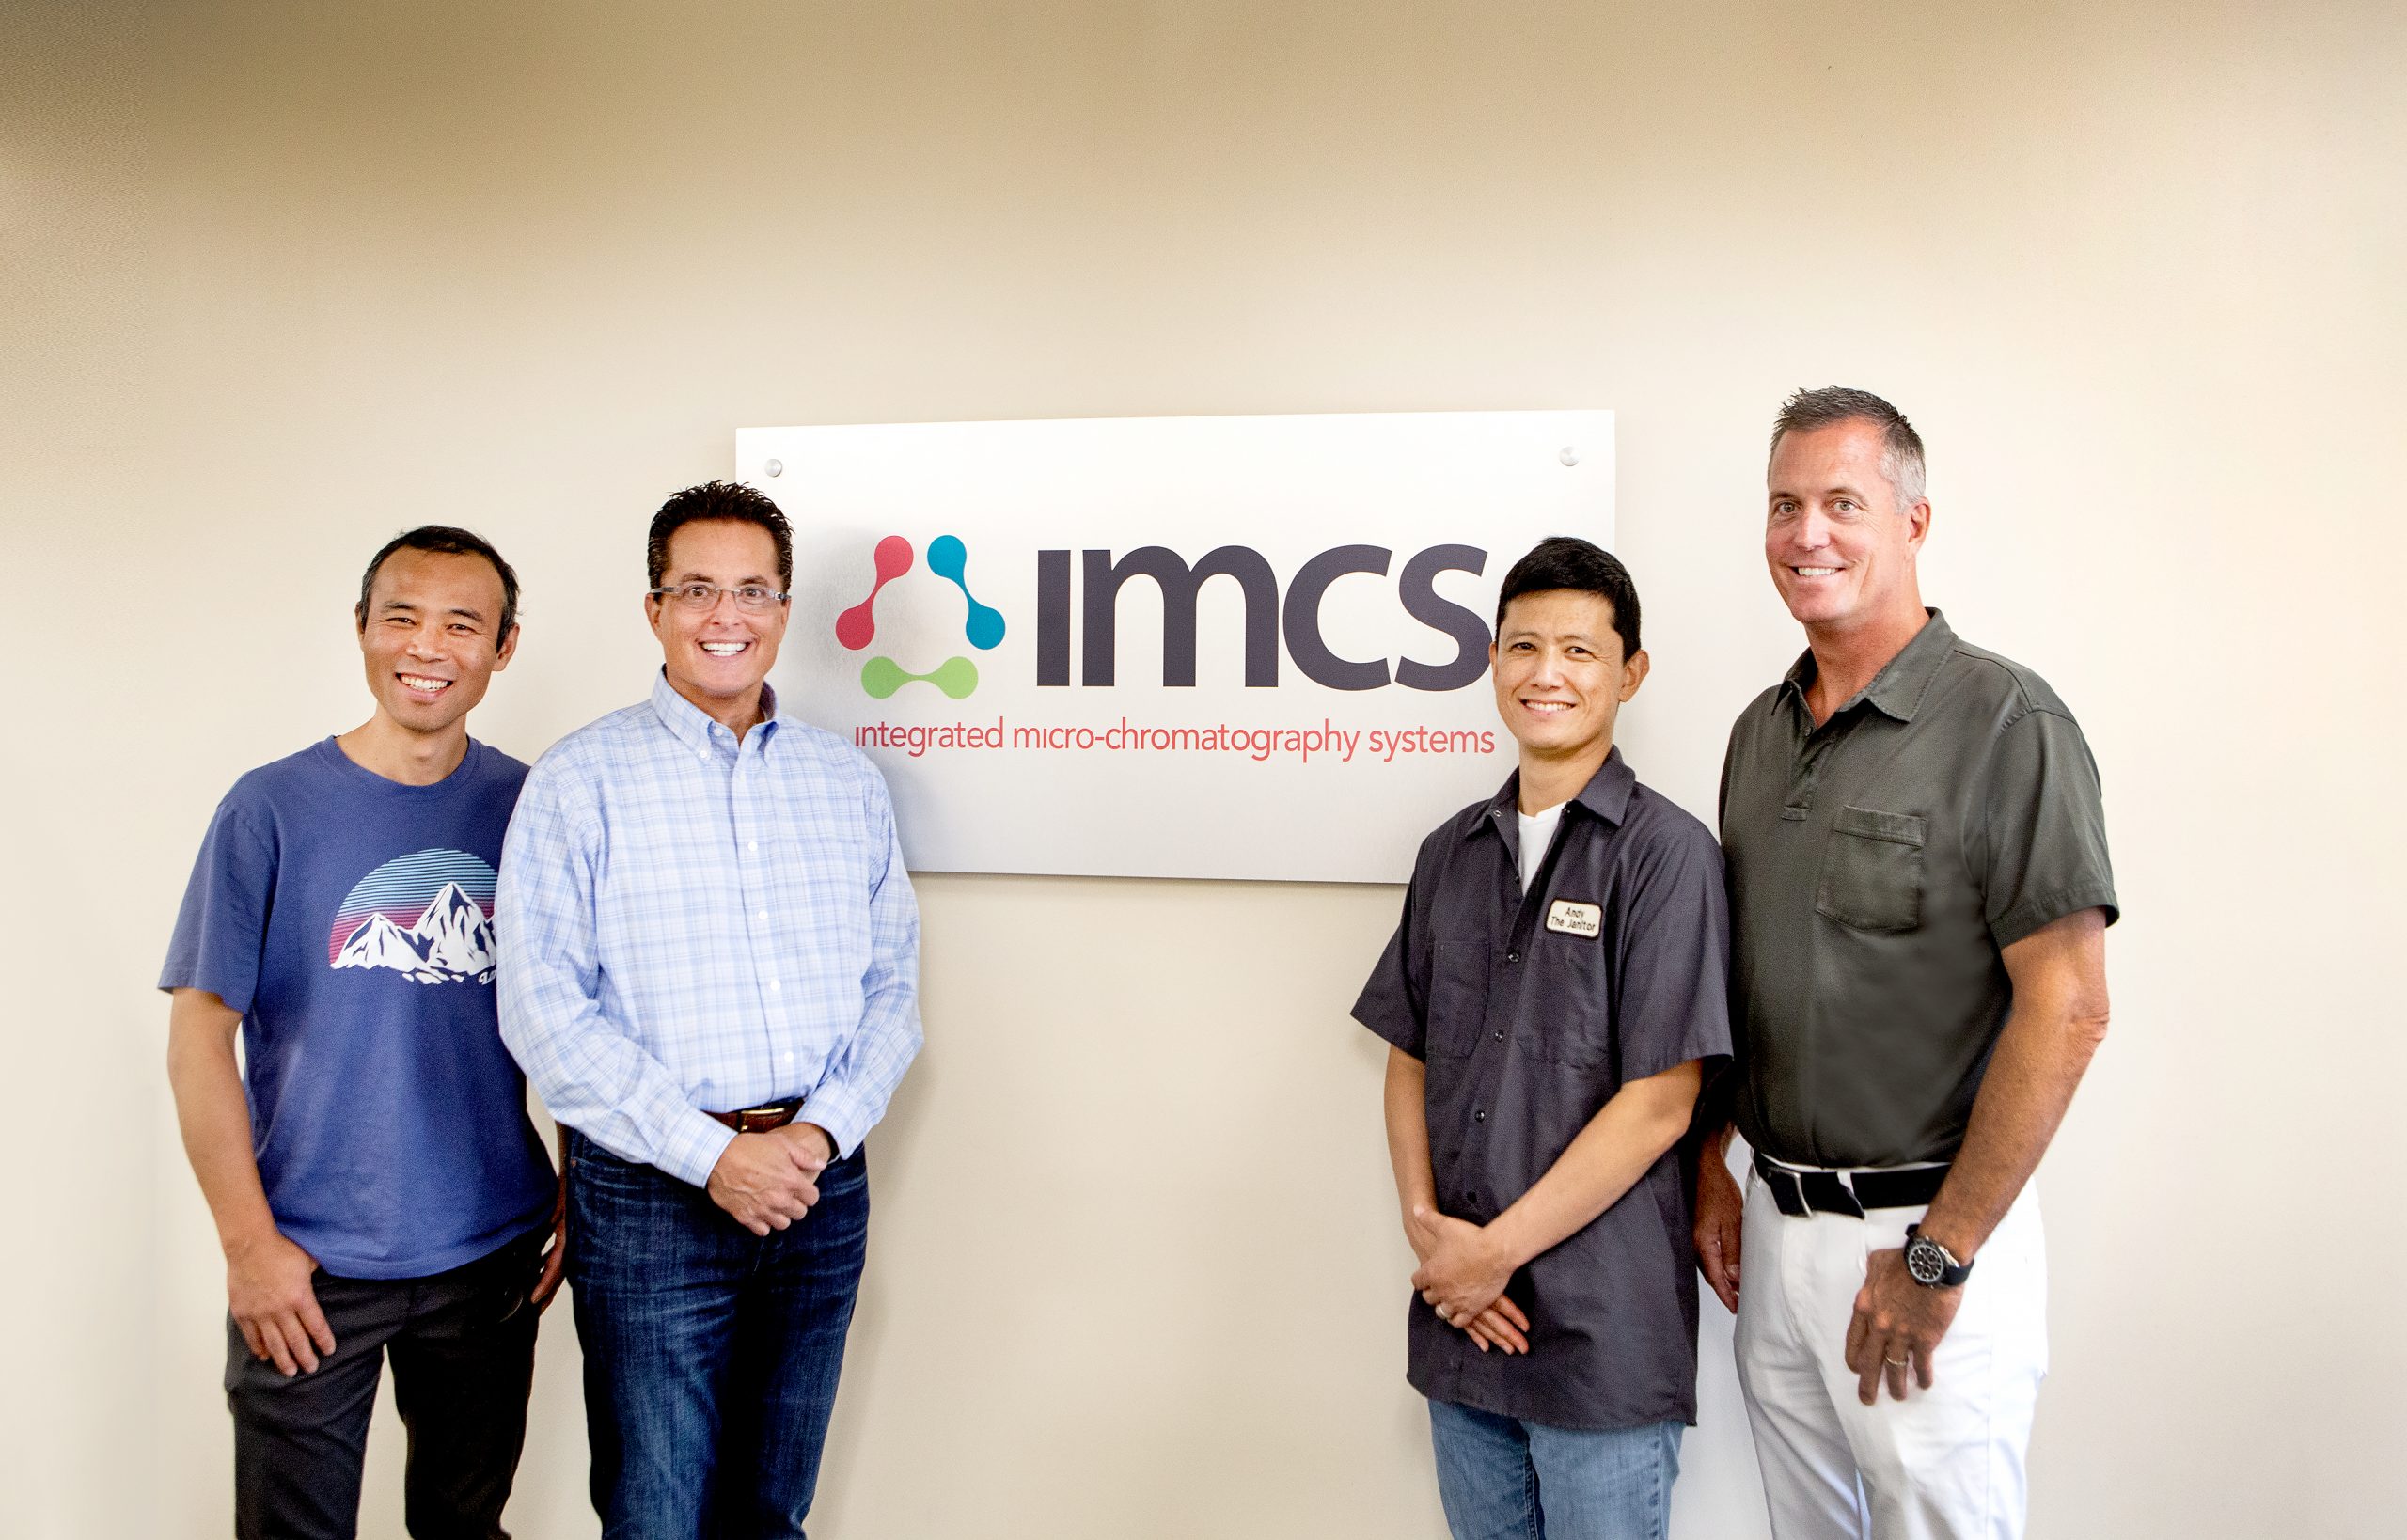 IMCS Board of Directors: Qian Wang, Ph.D., IMCS Co-Founder; Mark Hanna, Chief Revenue Officer; L. Andrew Lee, Ph.D., Chief Scientific Officer, IMCS Co-Founder; Tony Hanna, Board Member.